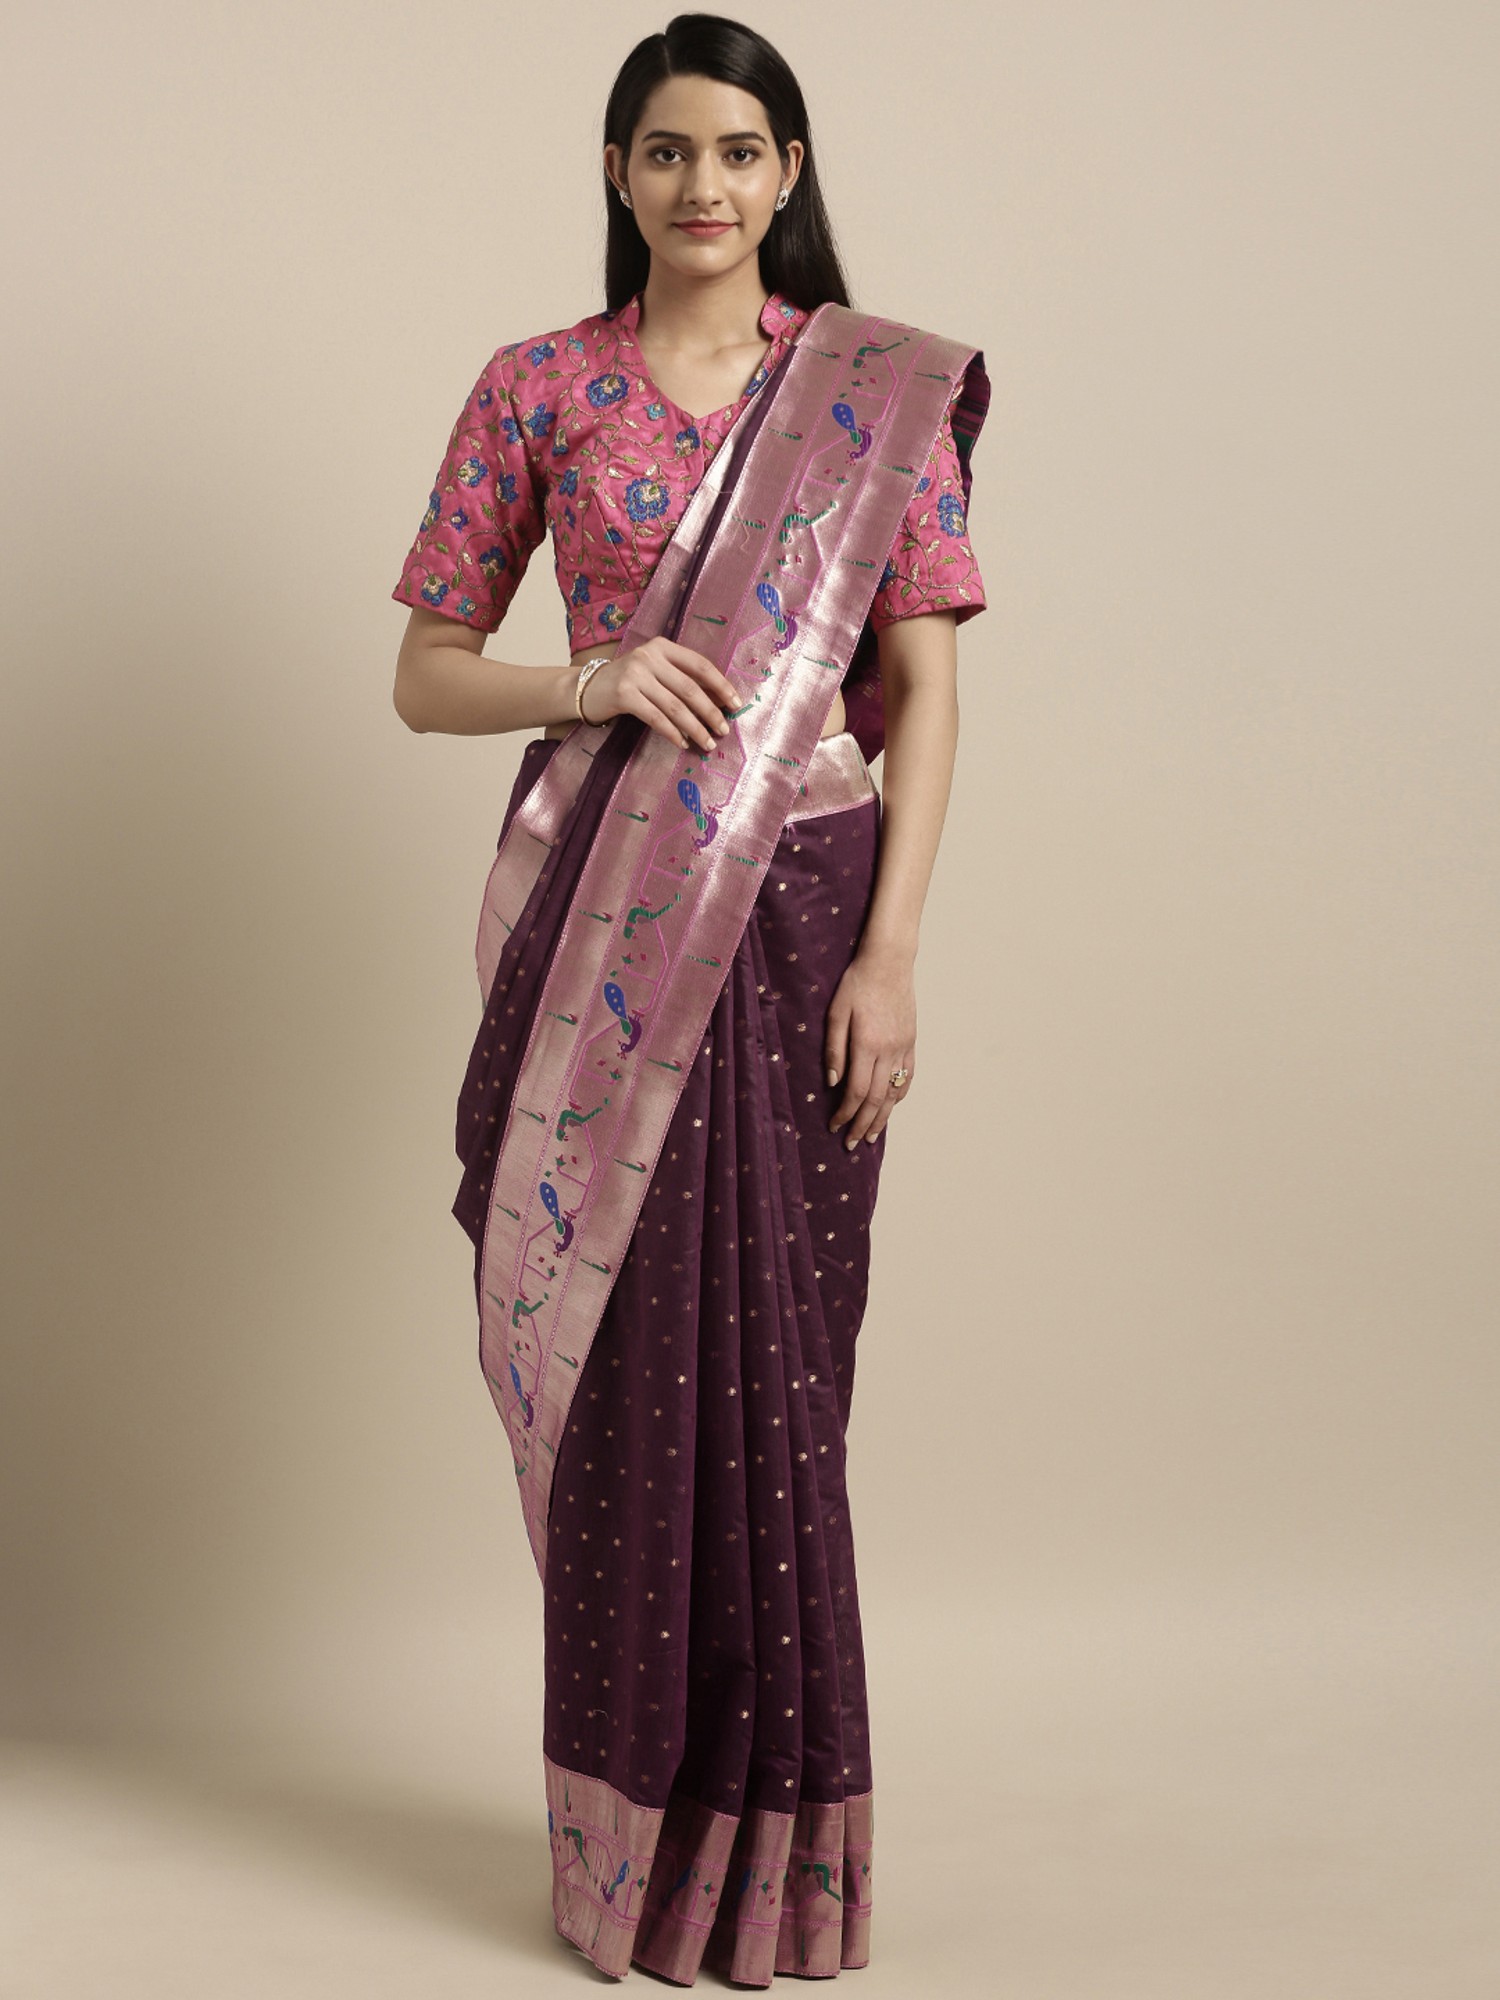 Women's Kanchipuram silk saree in Maroon dvz0002347 - Dvanza.com